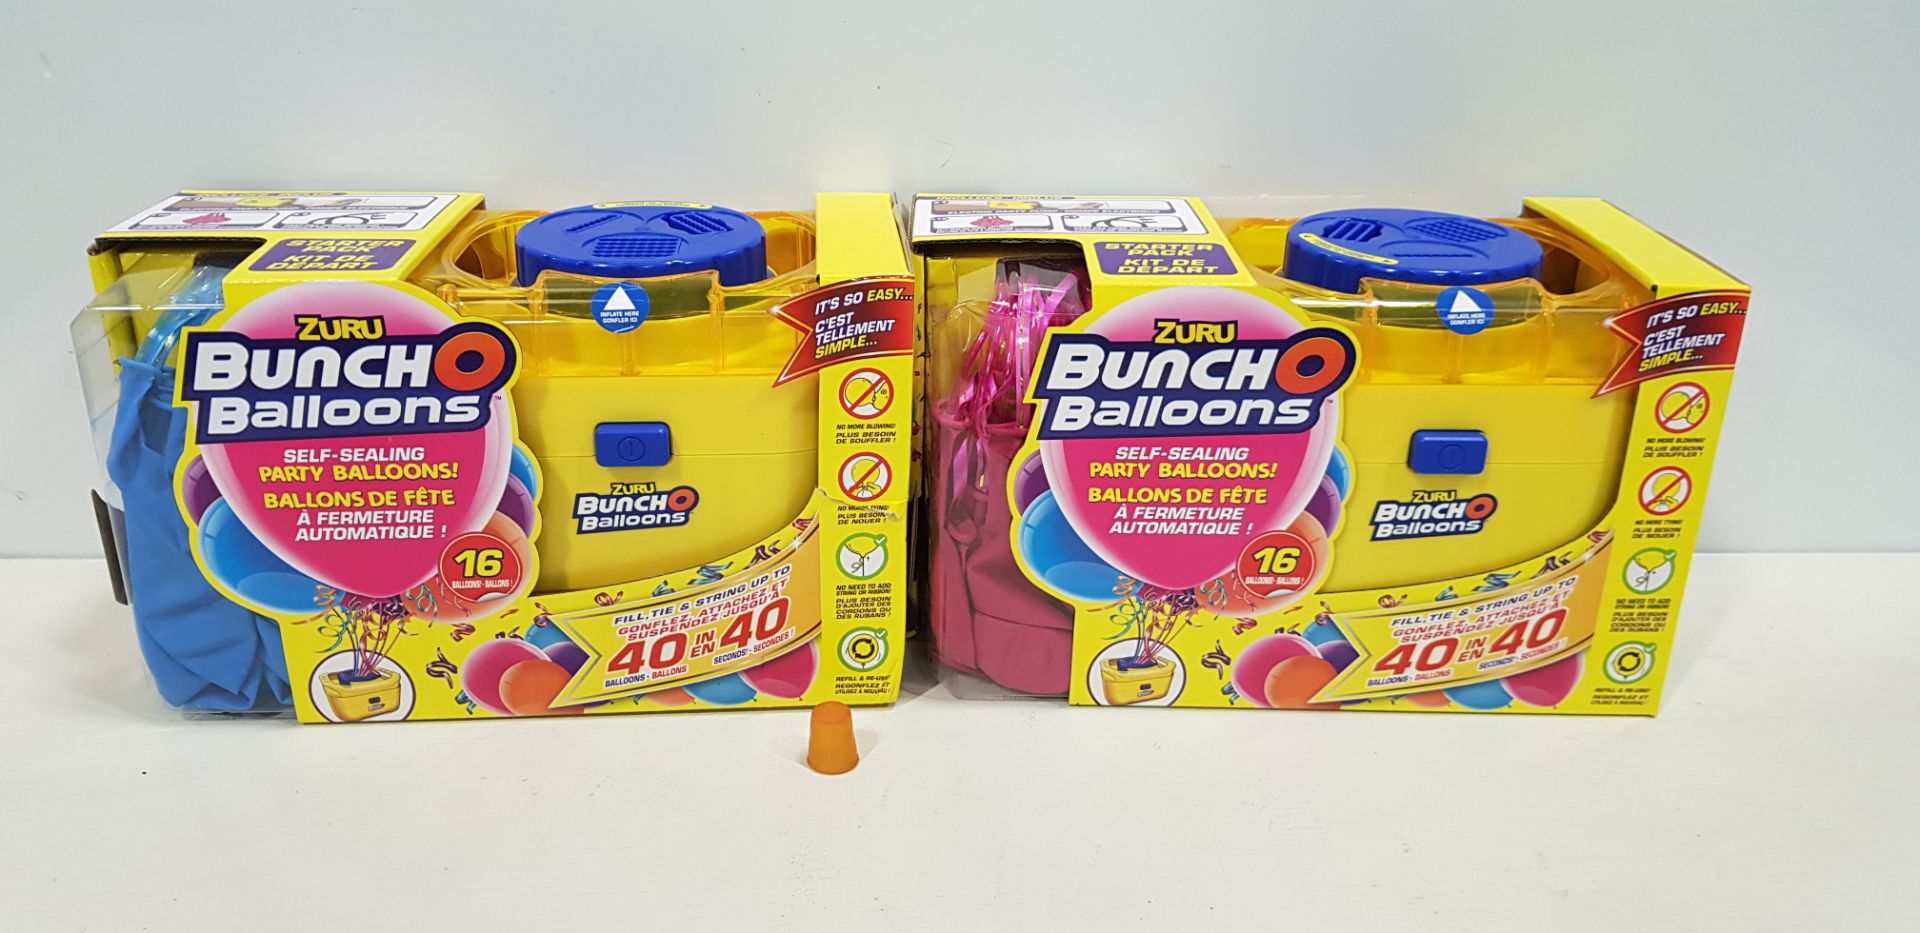 18 X BRAND NEW ZURO BUNCH O BALLOONS SELF-SEALING PARTY BALLOONS MACHINE (NOTE: EURO PLUG) - RRP £